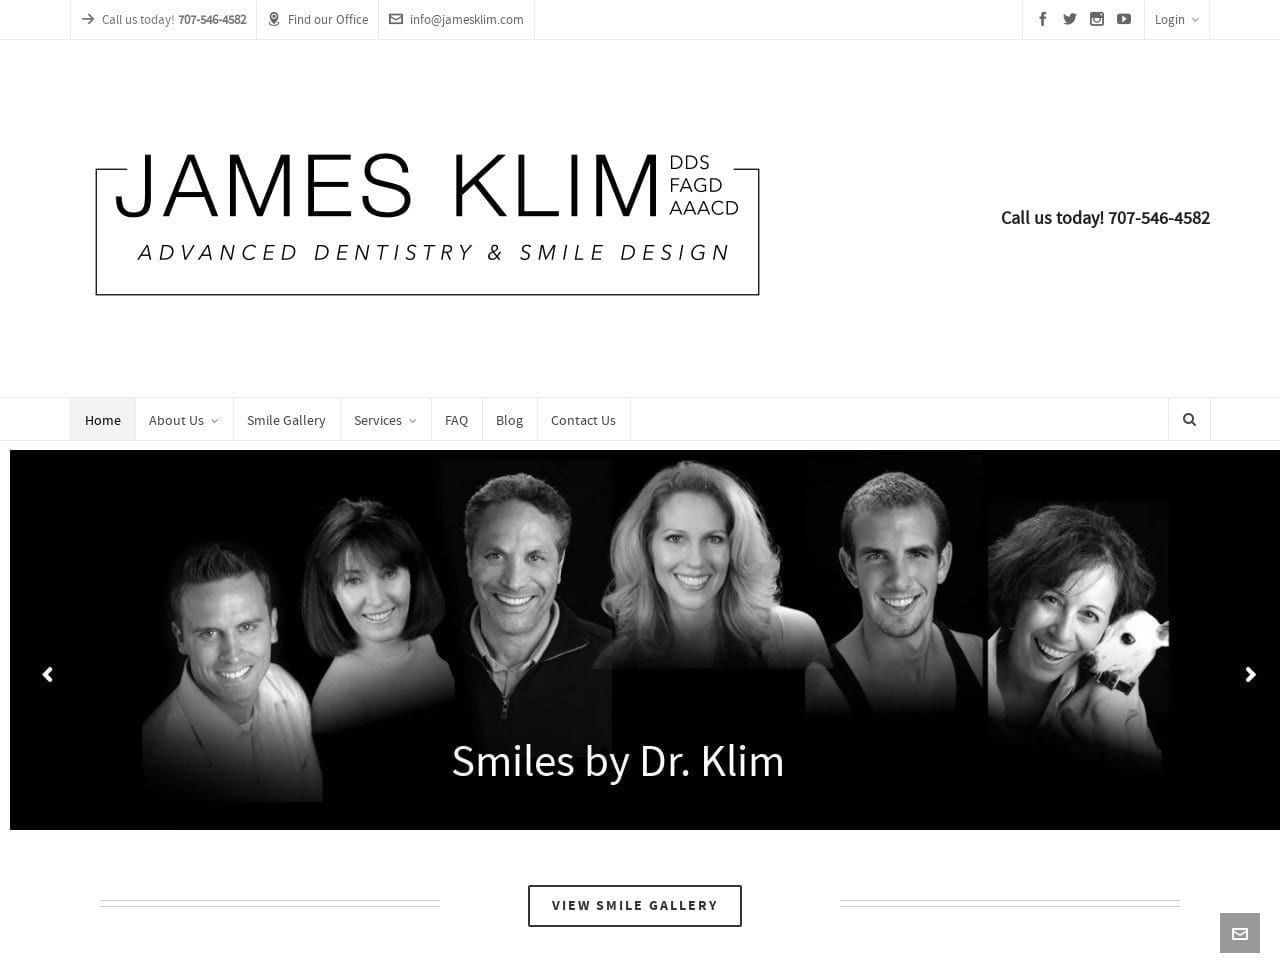 James Klim DDS Website Screenshot from jamesklim.com